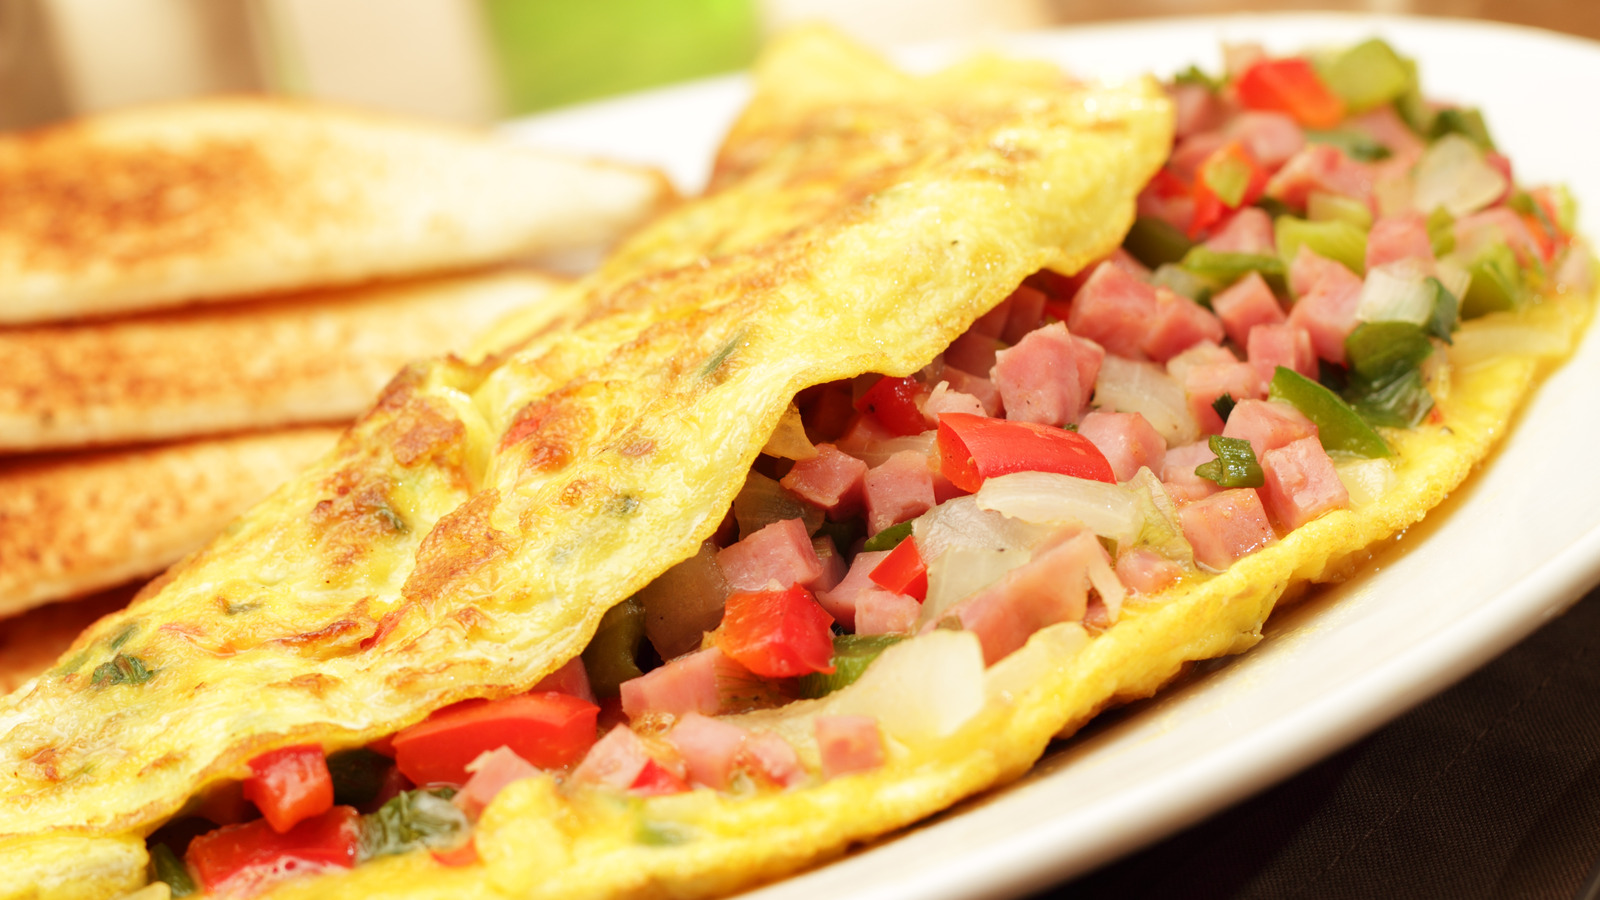 https://www.tastingtable.com/img/gallery/16-popular-omelet-fillings-ranked-worst-to-best/l-intro-1689604472.jpg